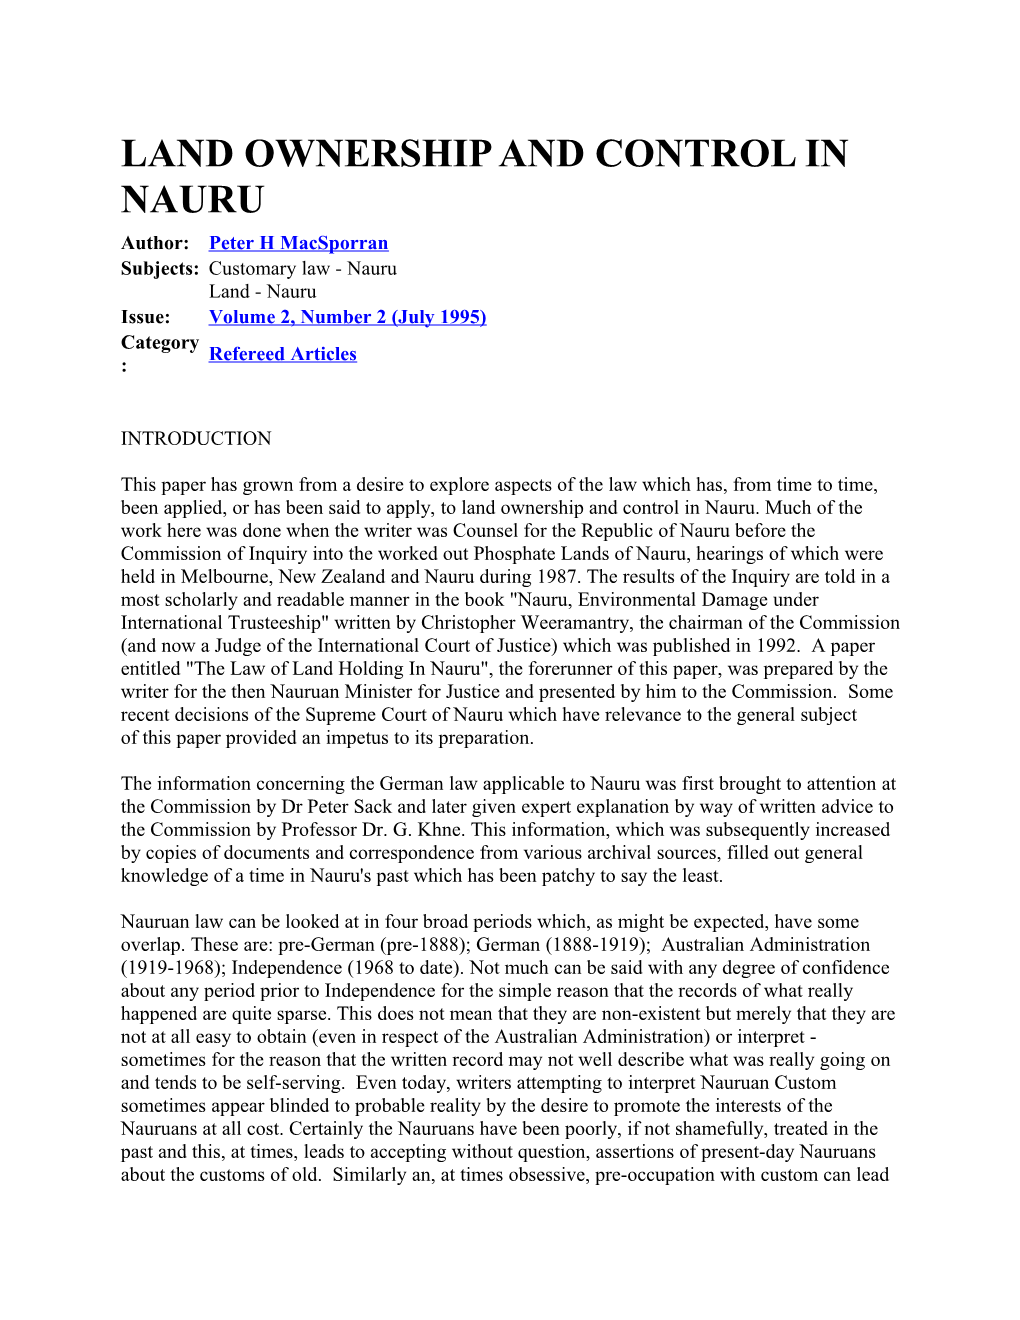 Land Ownership and Control in Nauru